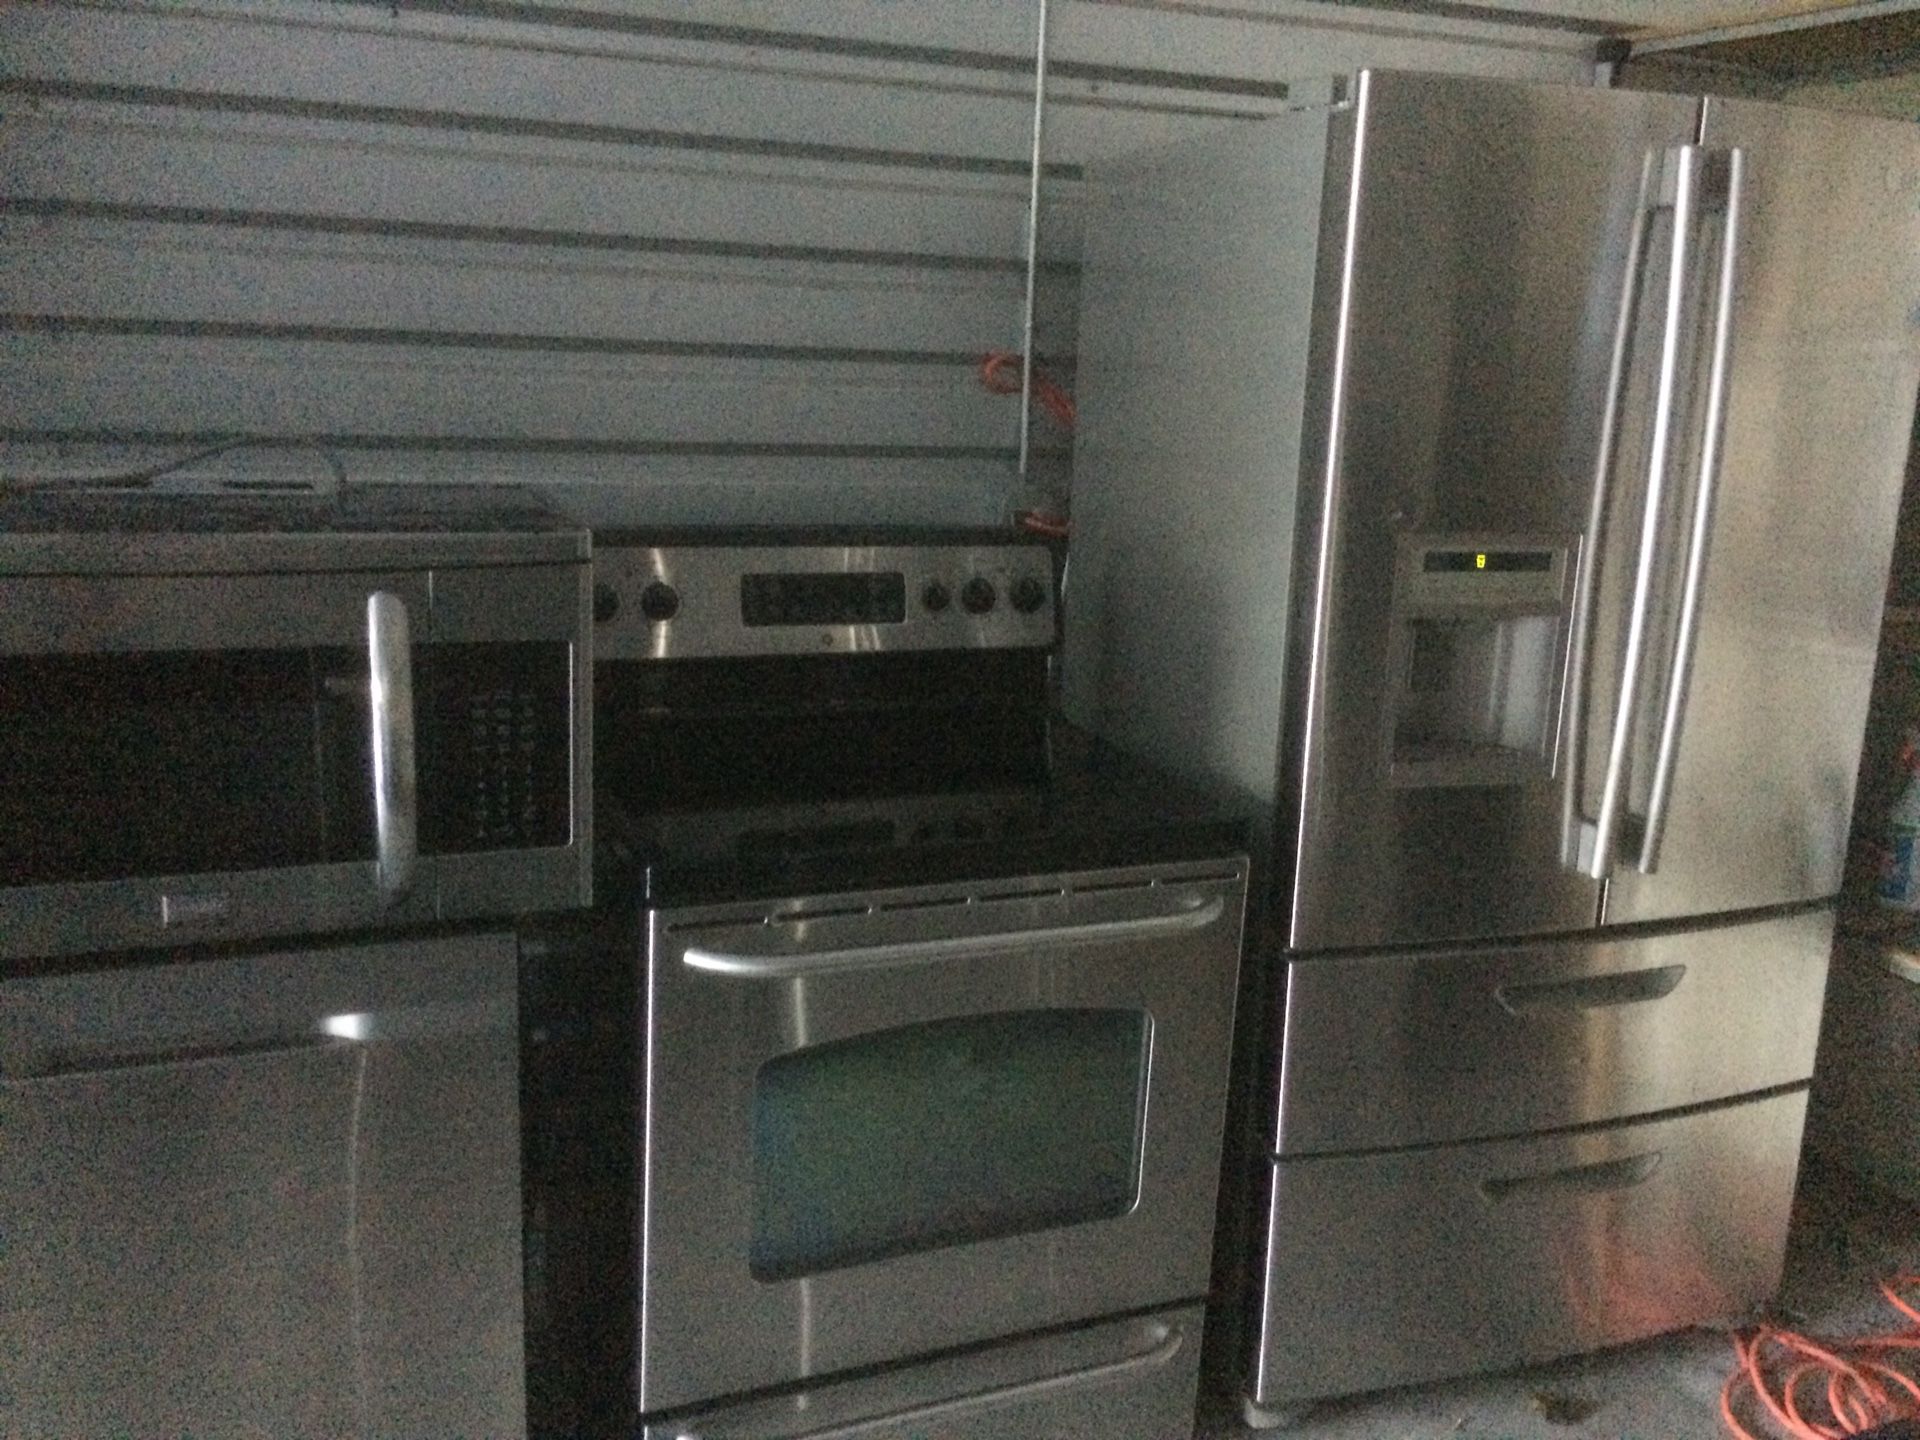 Stainless steel fridge stove microwave dishwasher